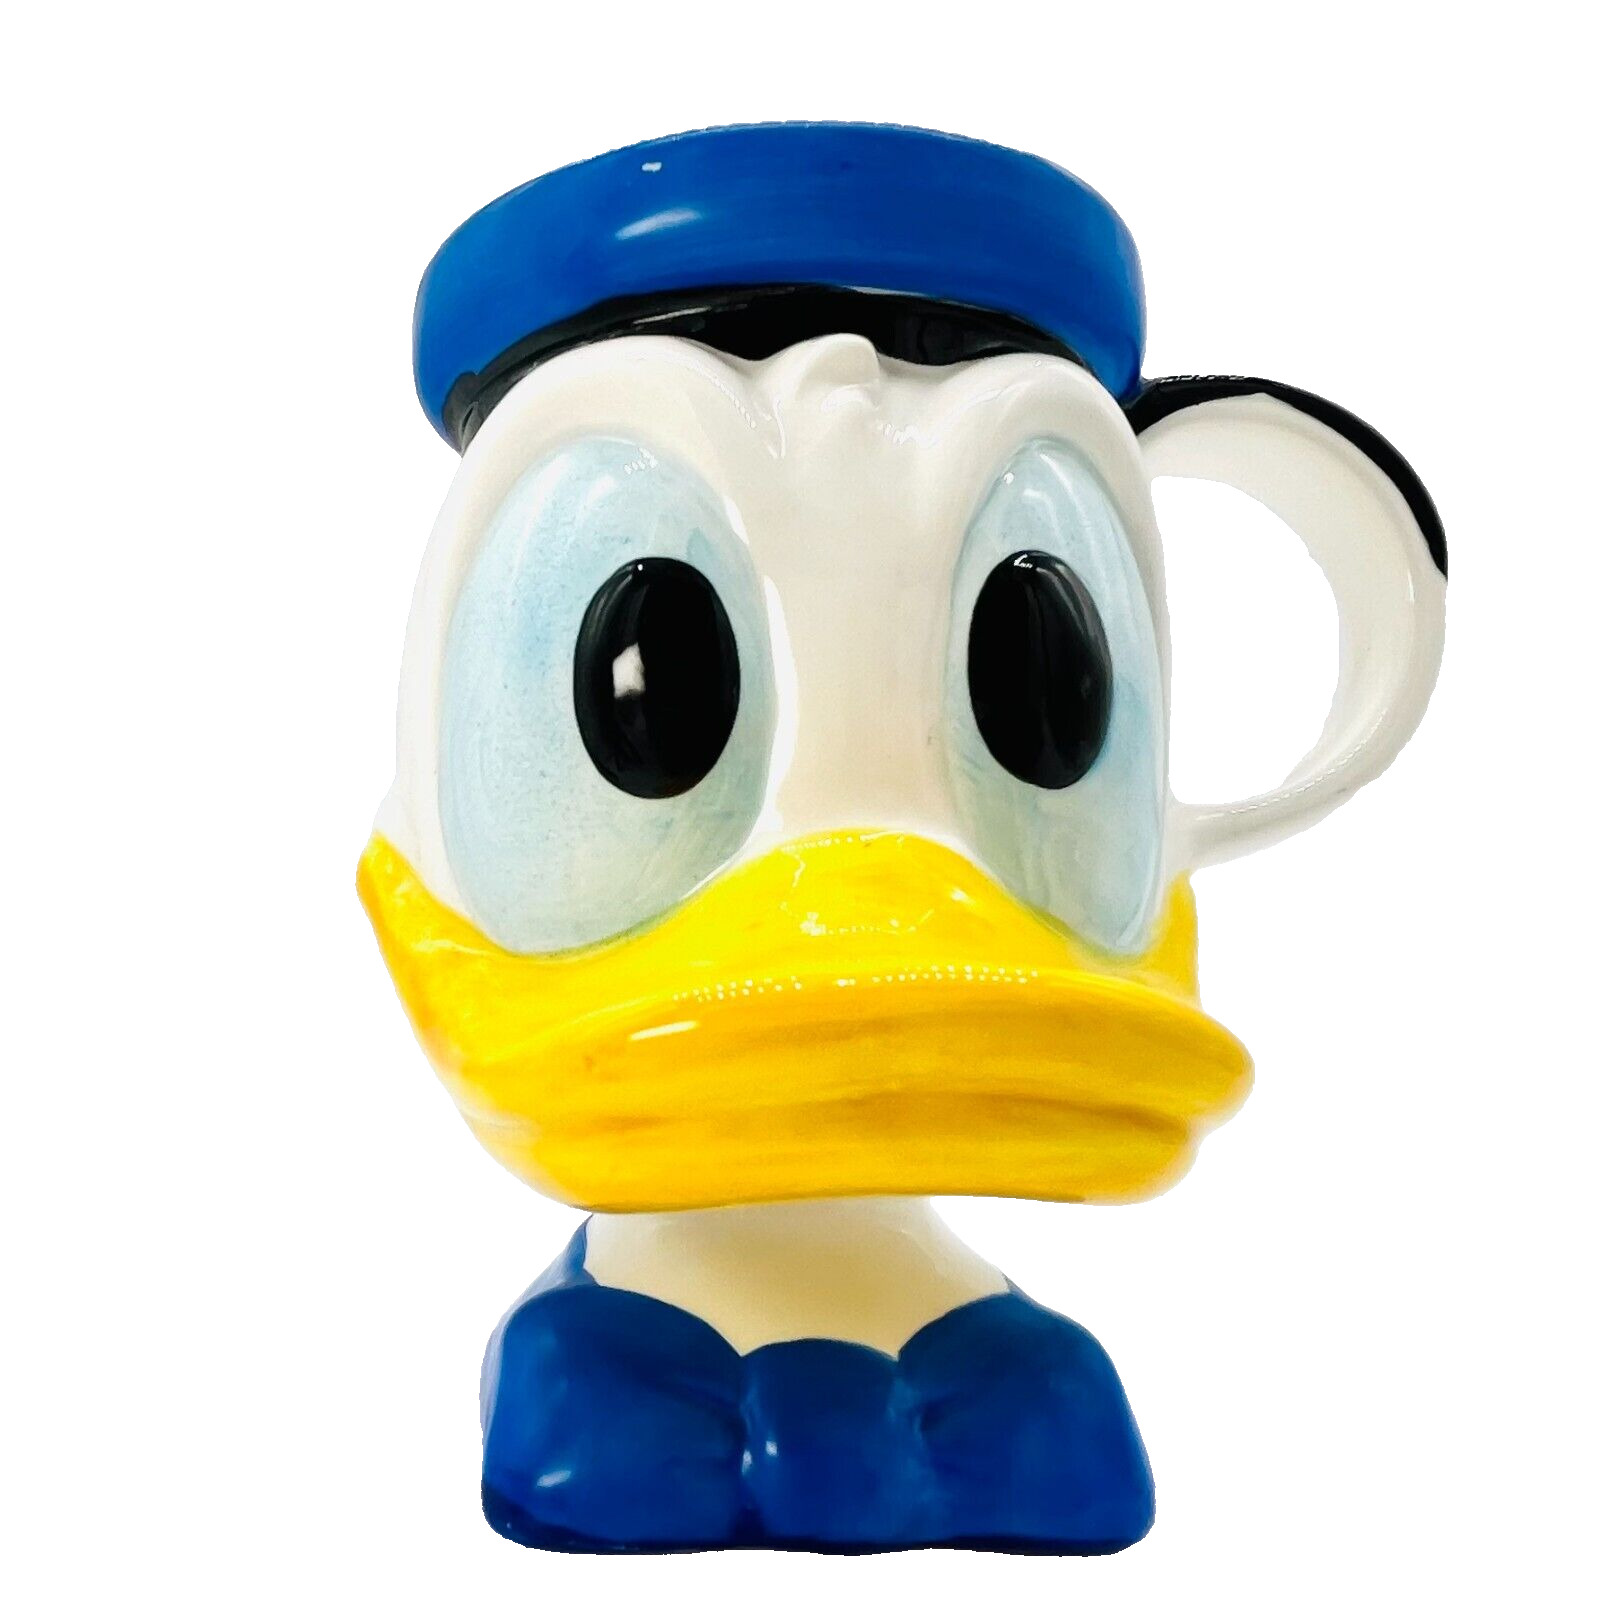 Vintage Donald Duck Cup Tokyo Disneyland 30 years ago 5.5in